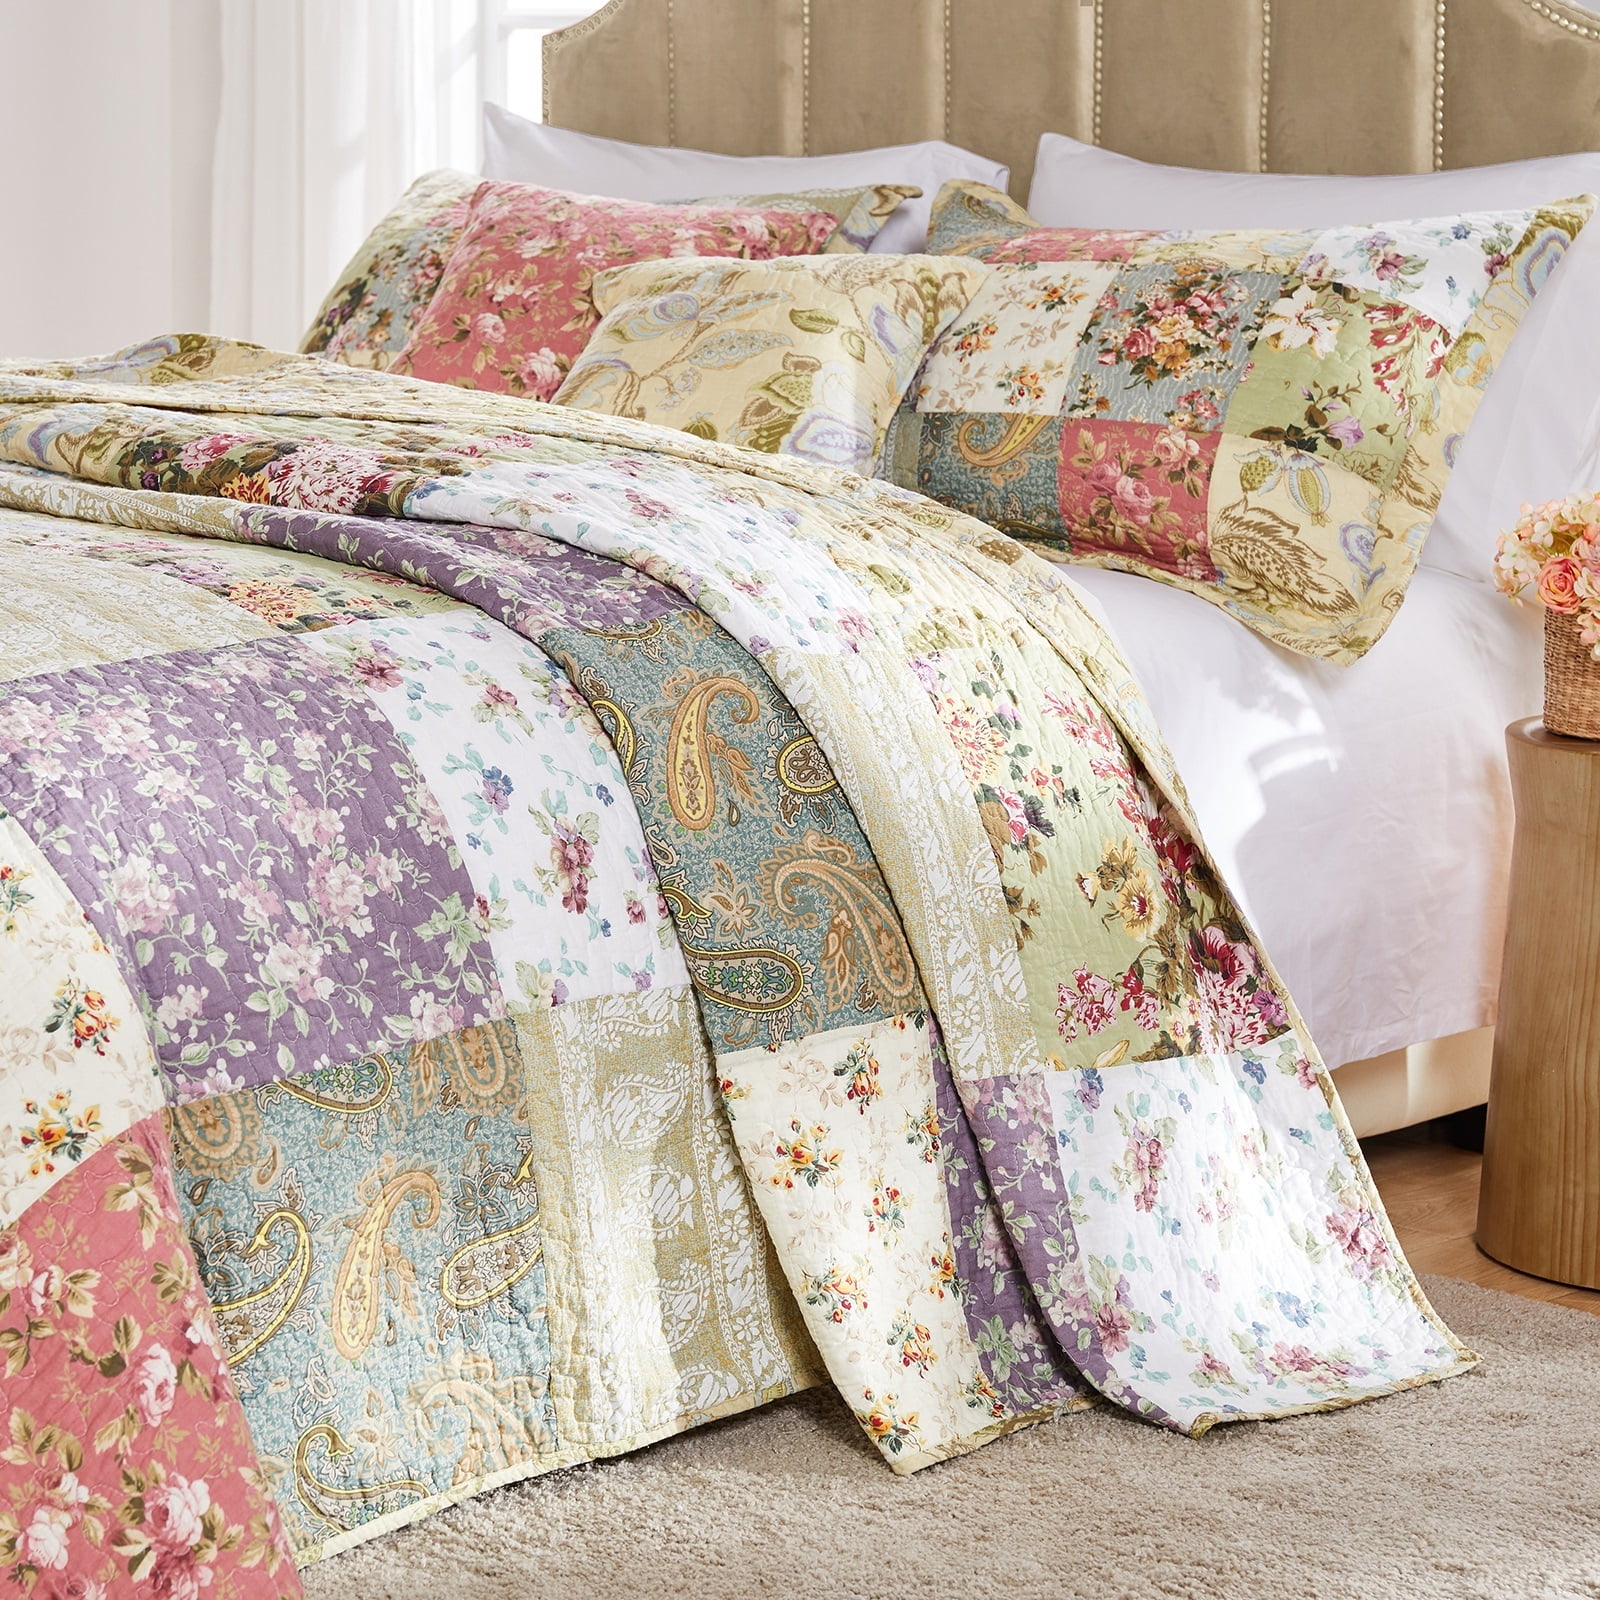 show original title Details about   Cotton sheets set double together on below floral pillowcases 